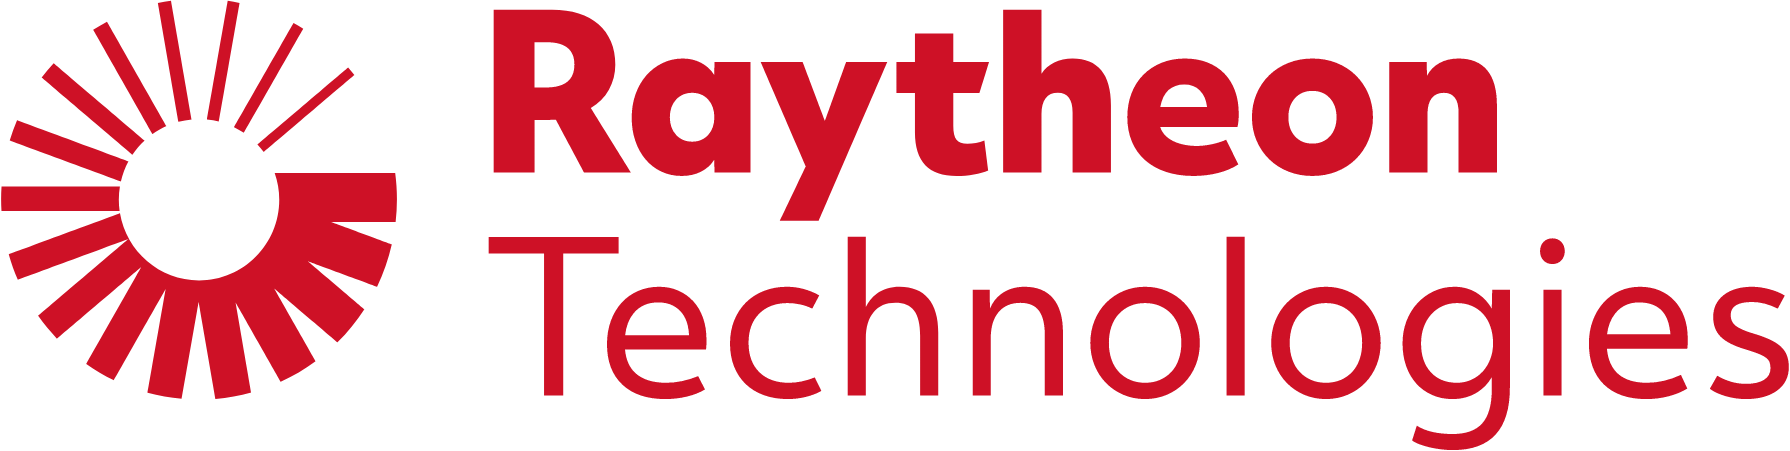 Raytheon Technologies logo large (transparent PNG)